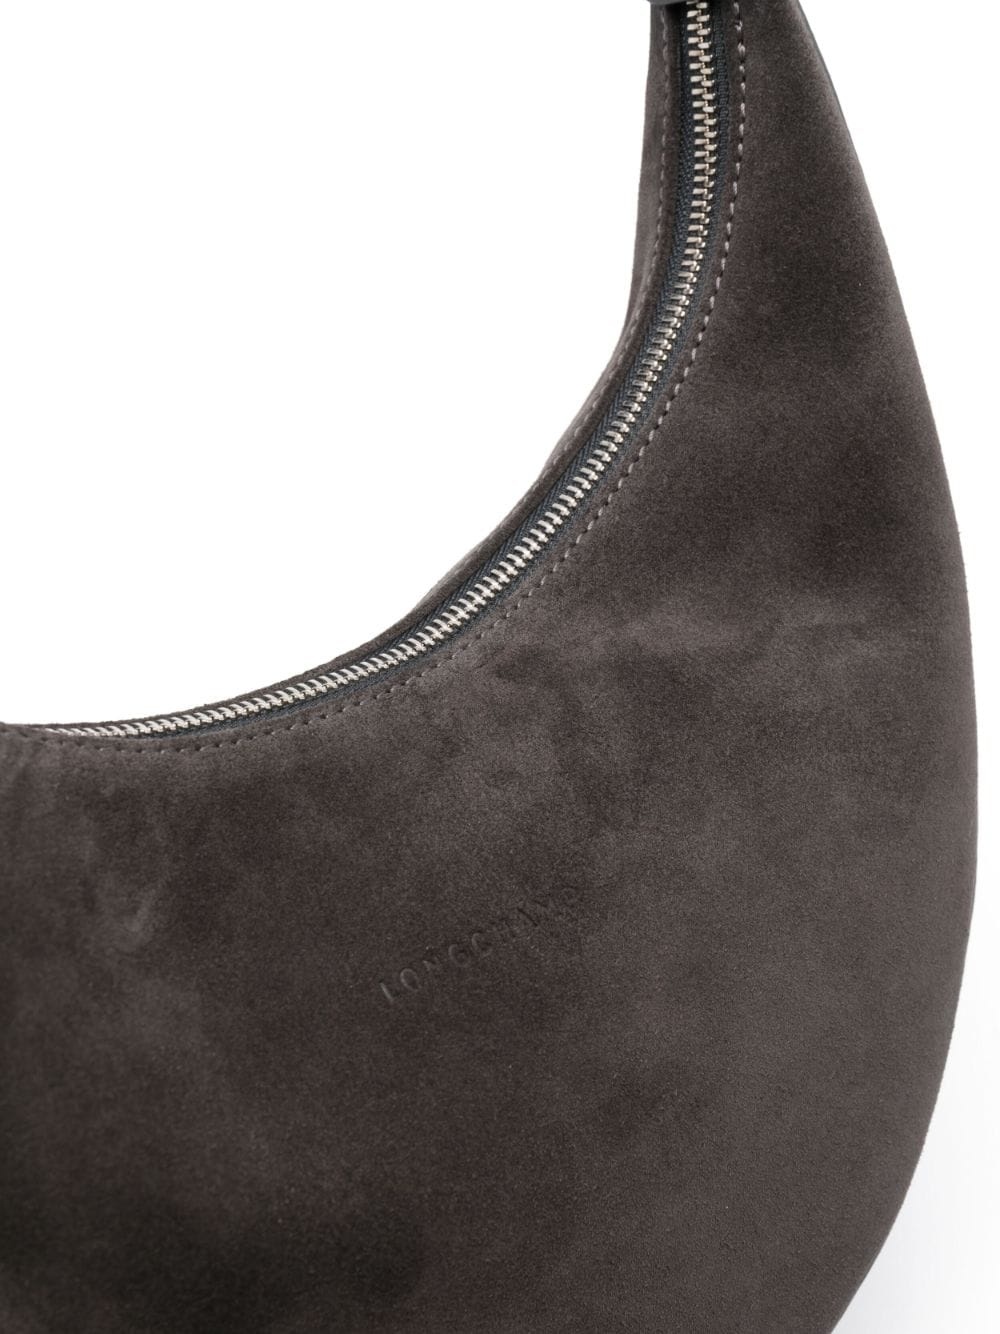 Longchamp Medium Roseau Essential Hobo Bag